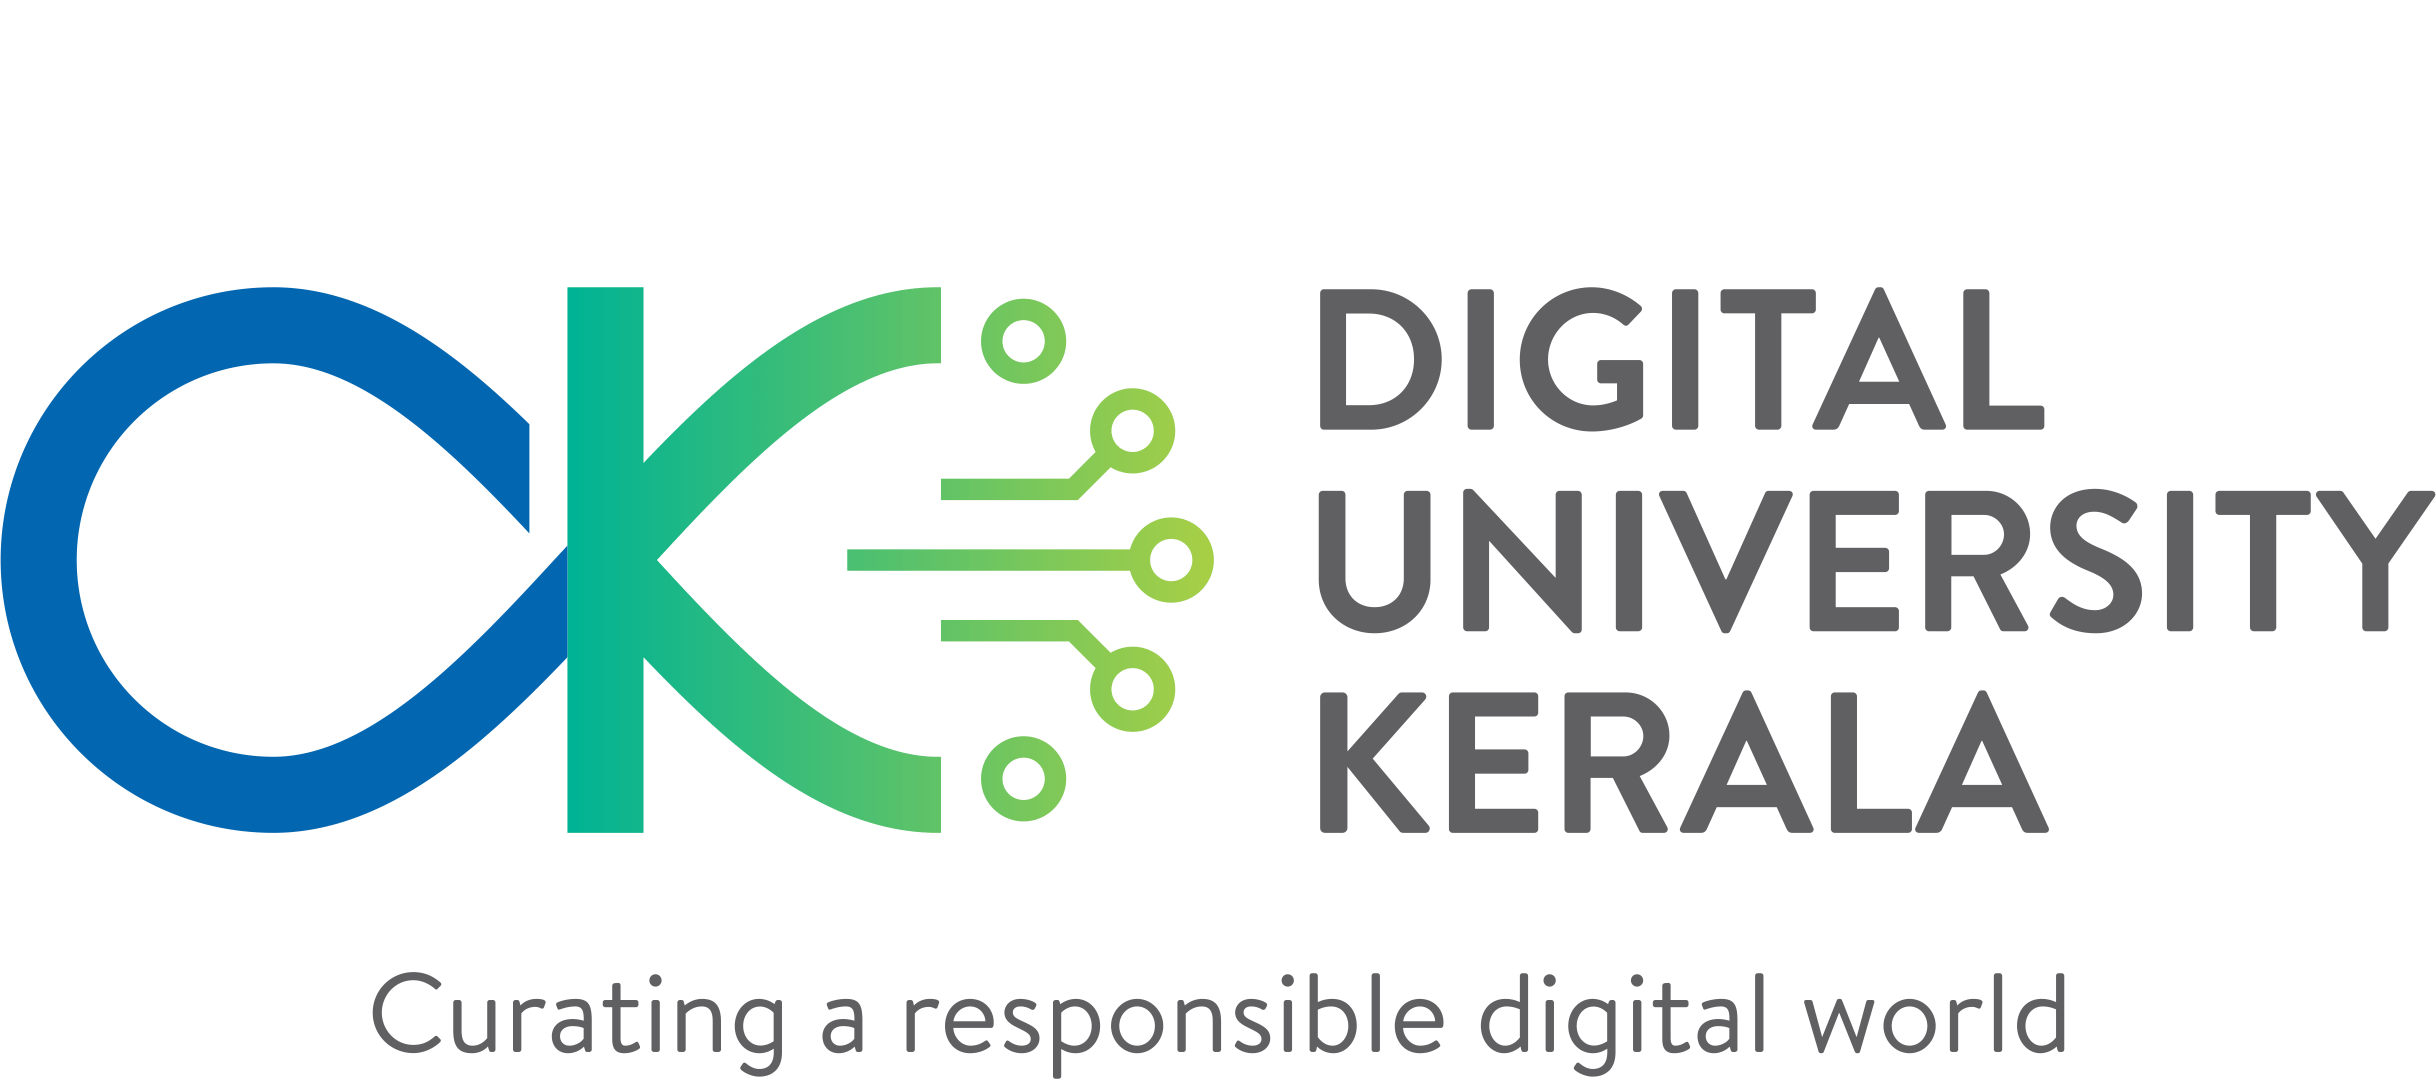 home - digital university kerala